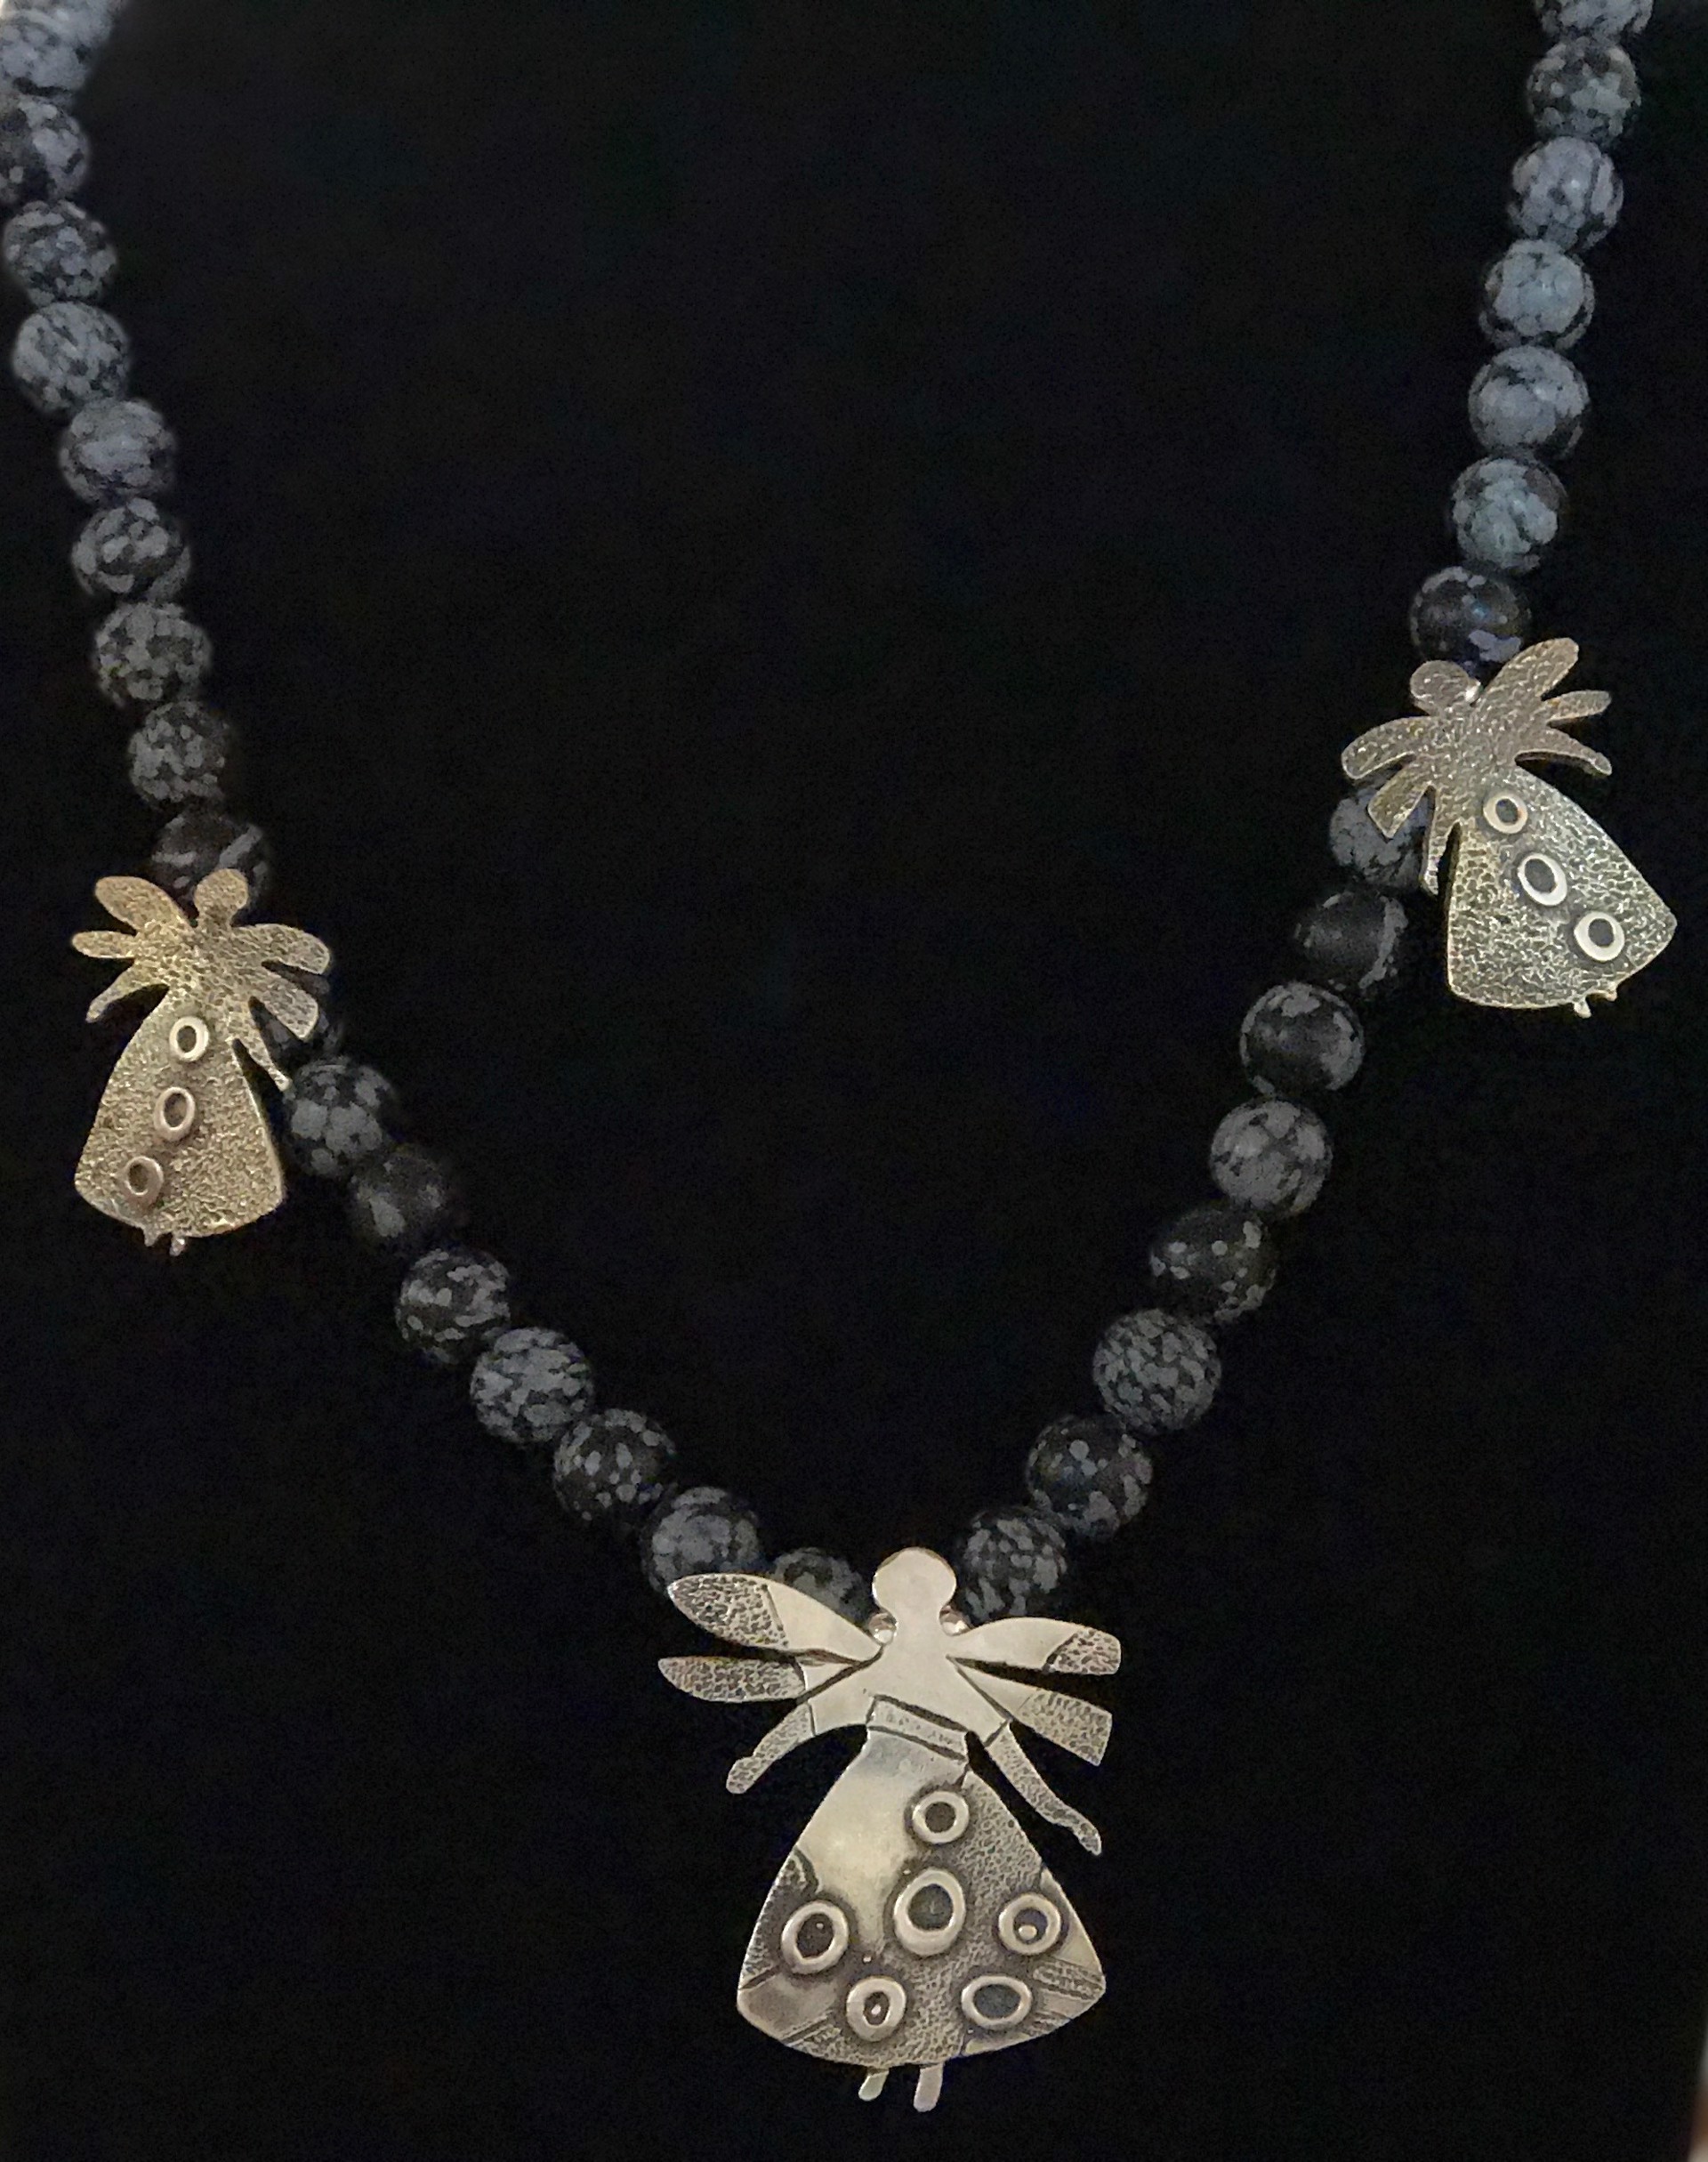 Pollinator necklace on snowflake obsidian beads by Melanie A. Yazzie